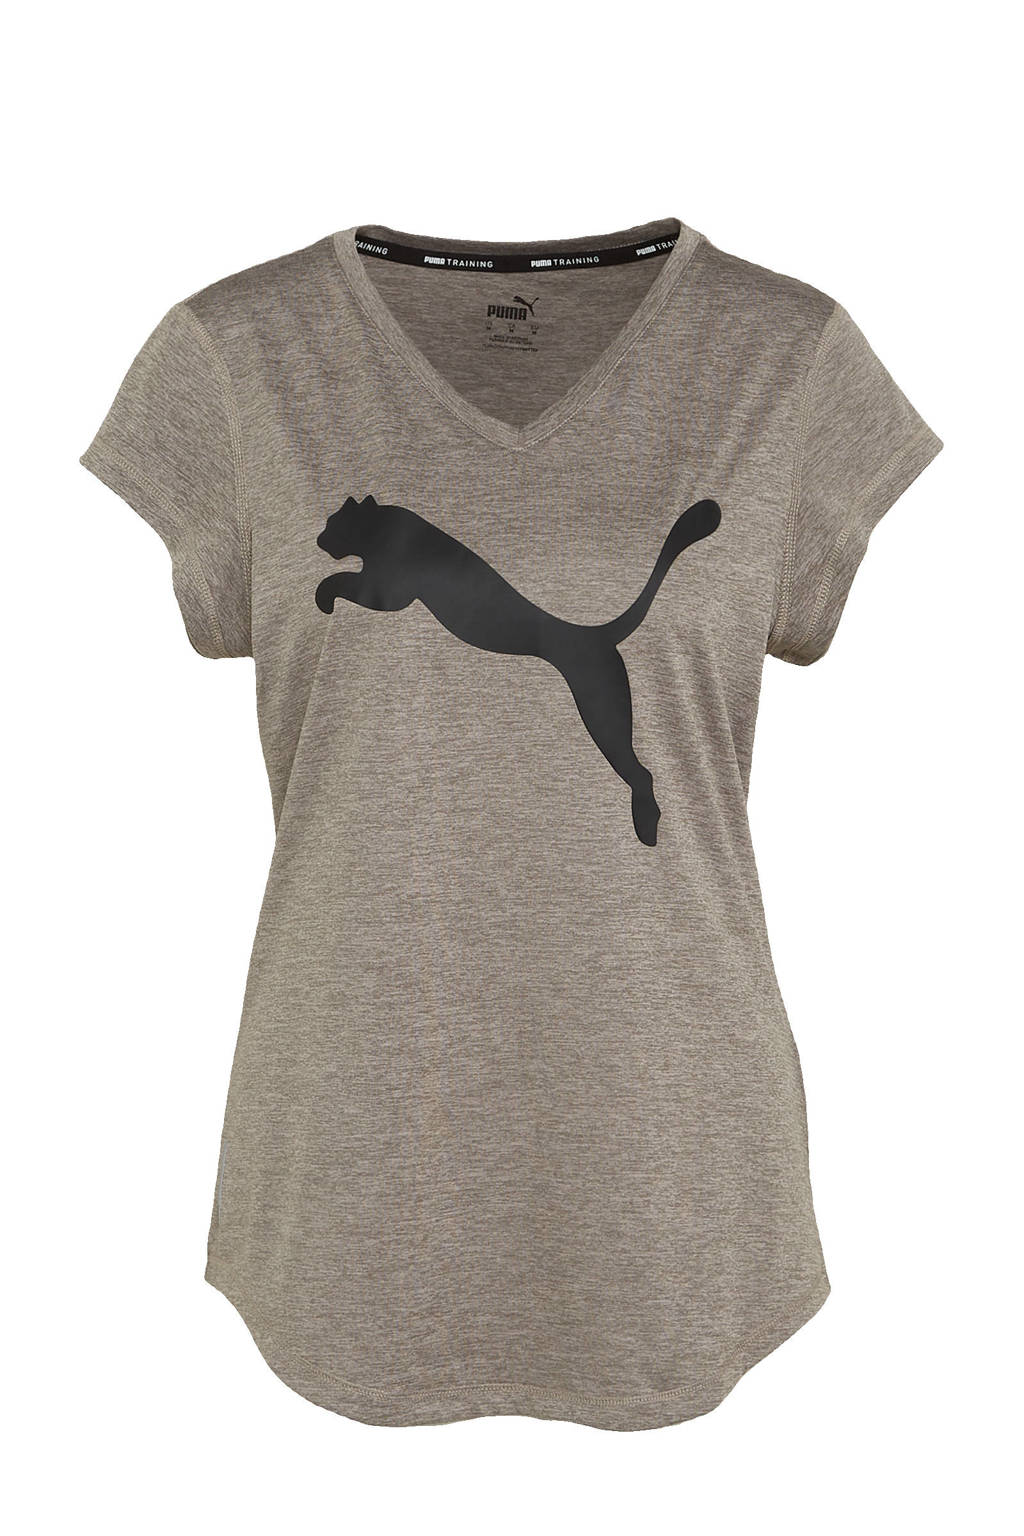 Grijze dames Puma sport T-shirt van gerecycled polyester met logo dessin, kapmouwtjes en V-hals